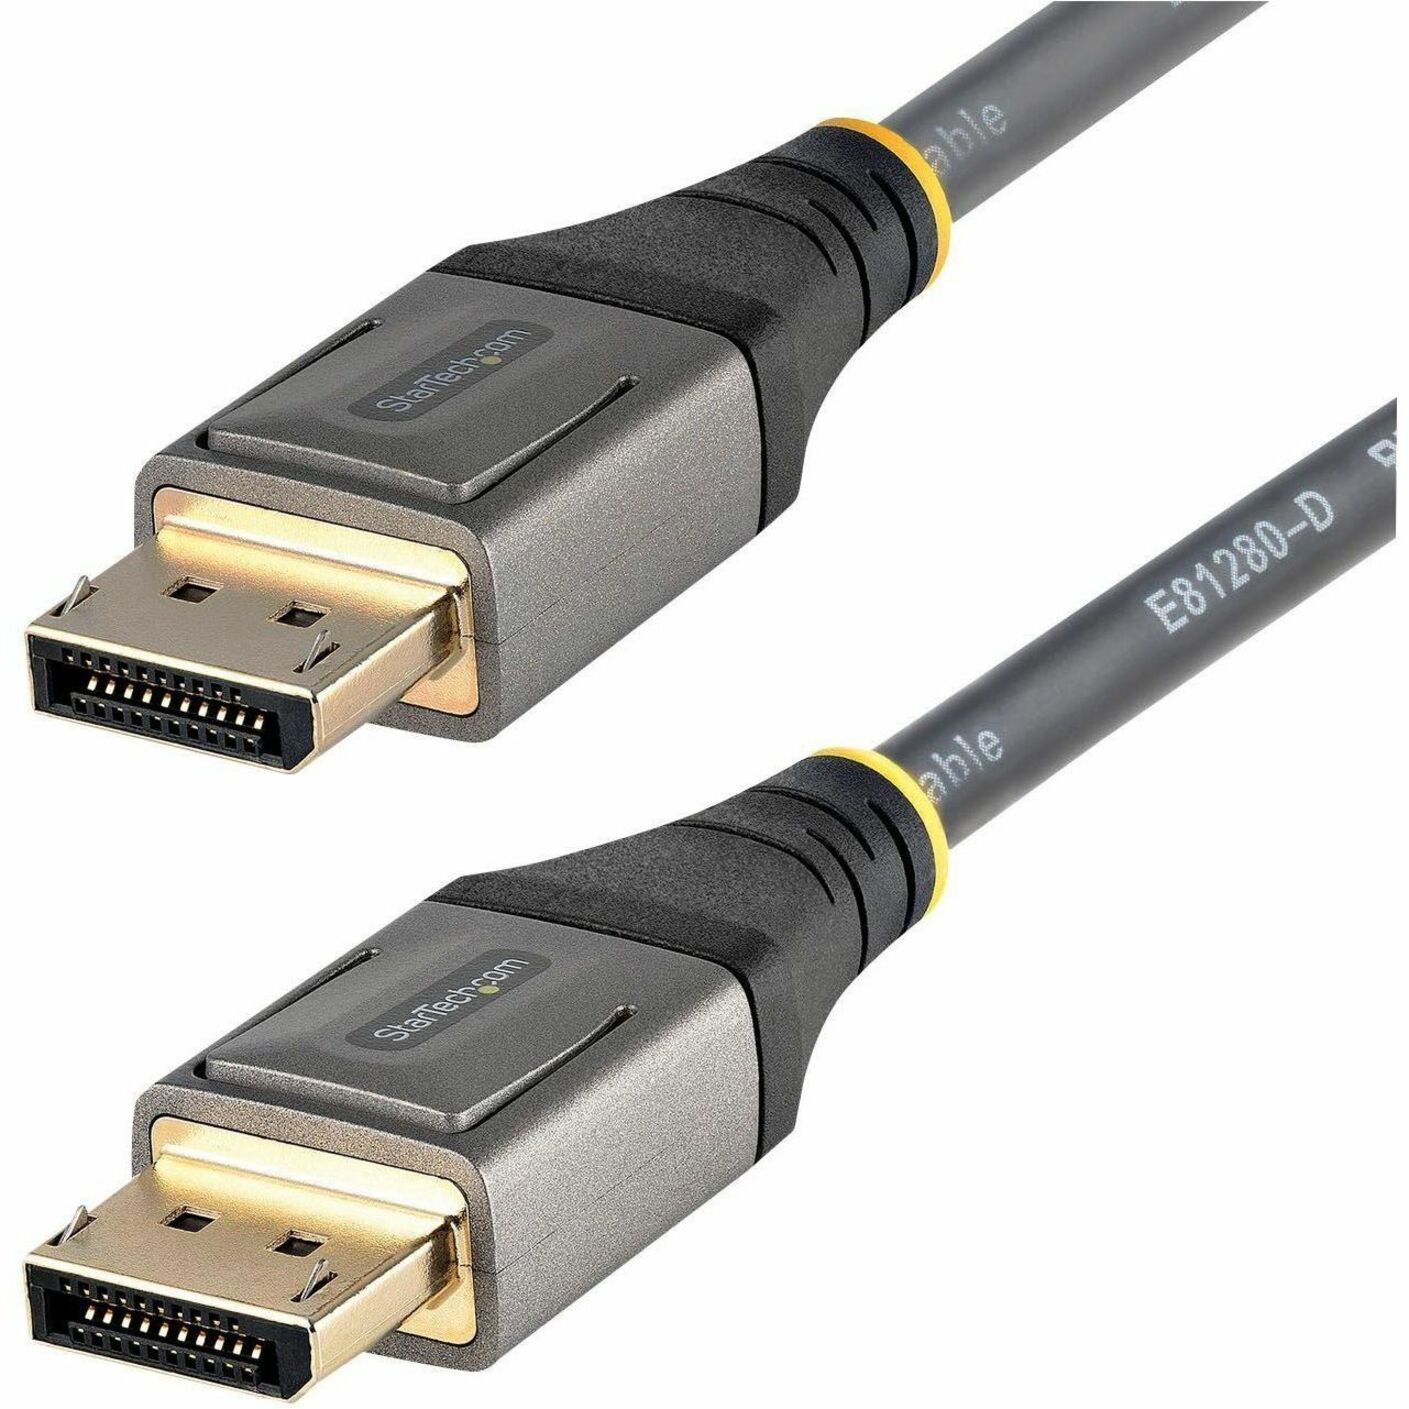 StarTech.com DP14VMM3M DisplayPort 1.4 8K Cable, 10ft (3m) VESA Certified, 8K 60Hz HDR10, UHD 4K 120Hz Video, DP to DP Monitor Cord